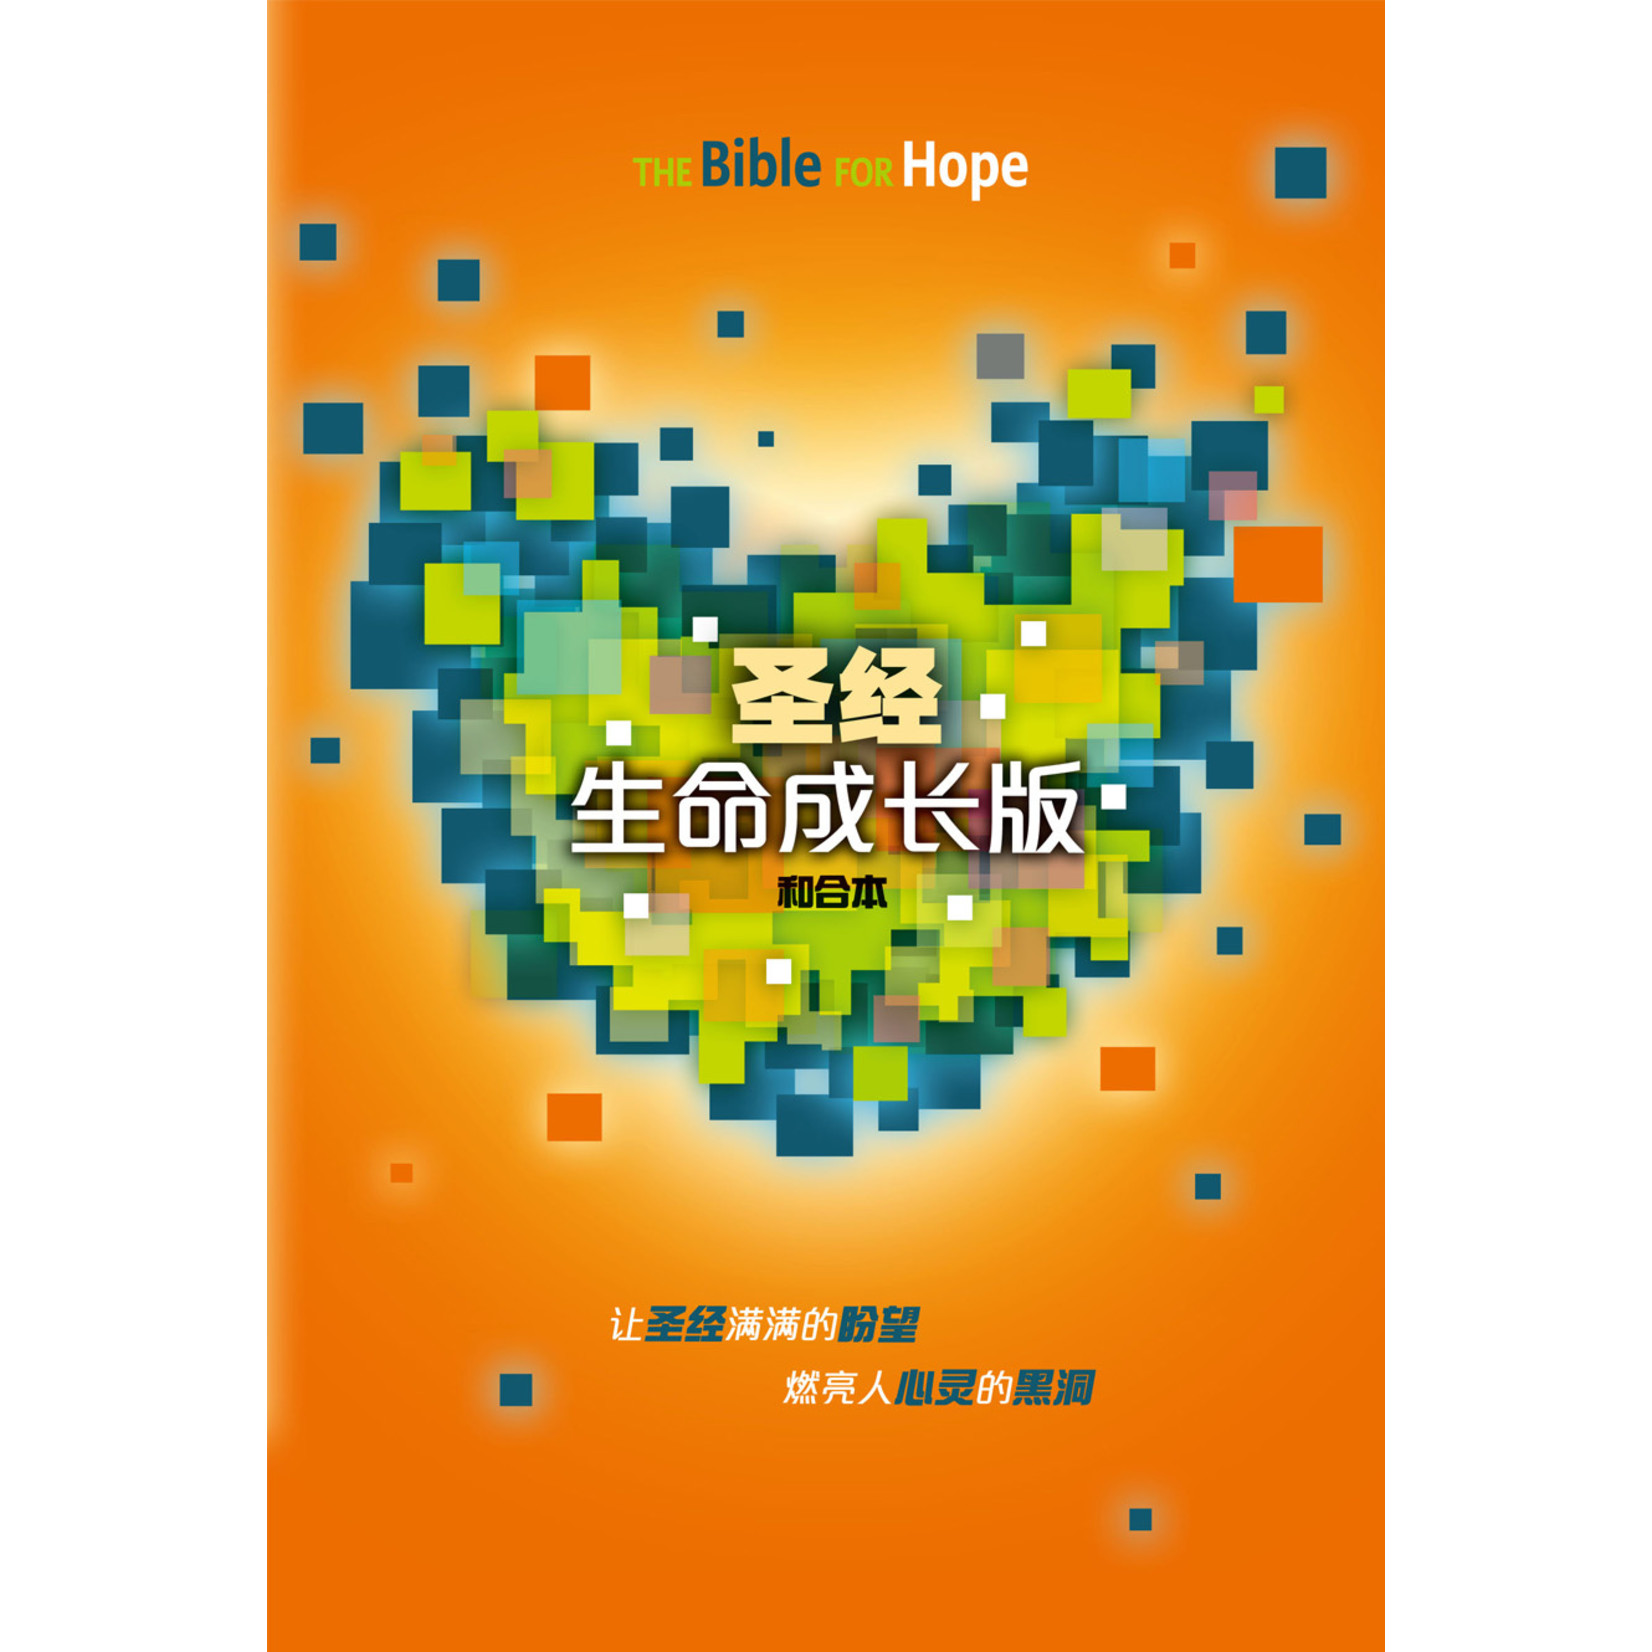 漢語聖經協會 Chinese Bible International 聖經．和合本．生命成長版．硬面．白邊．簡體 The Bible for Hope （Hardcover White Edge）Simplified Chinese